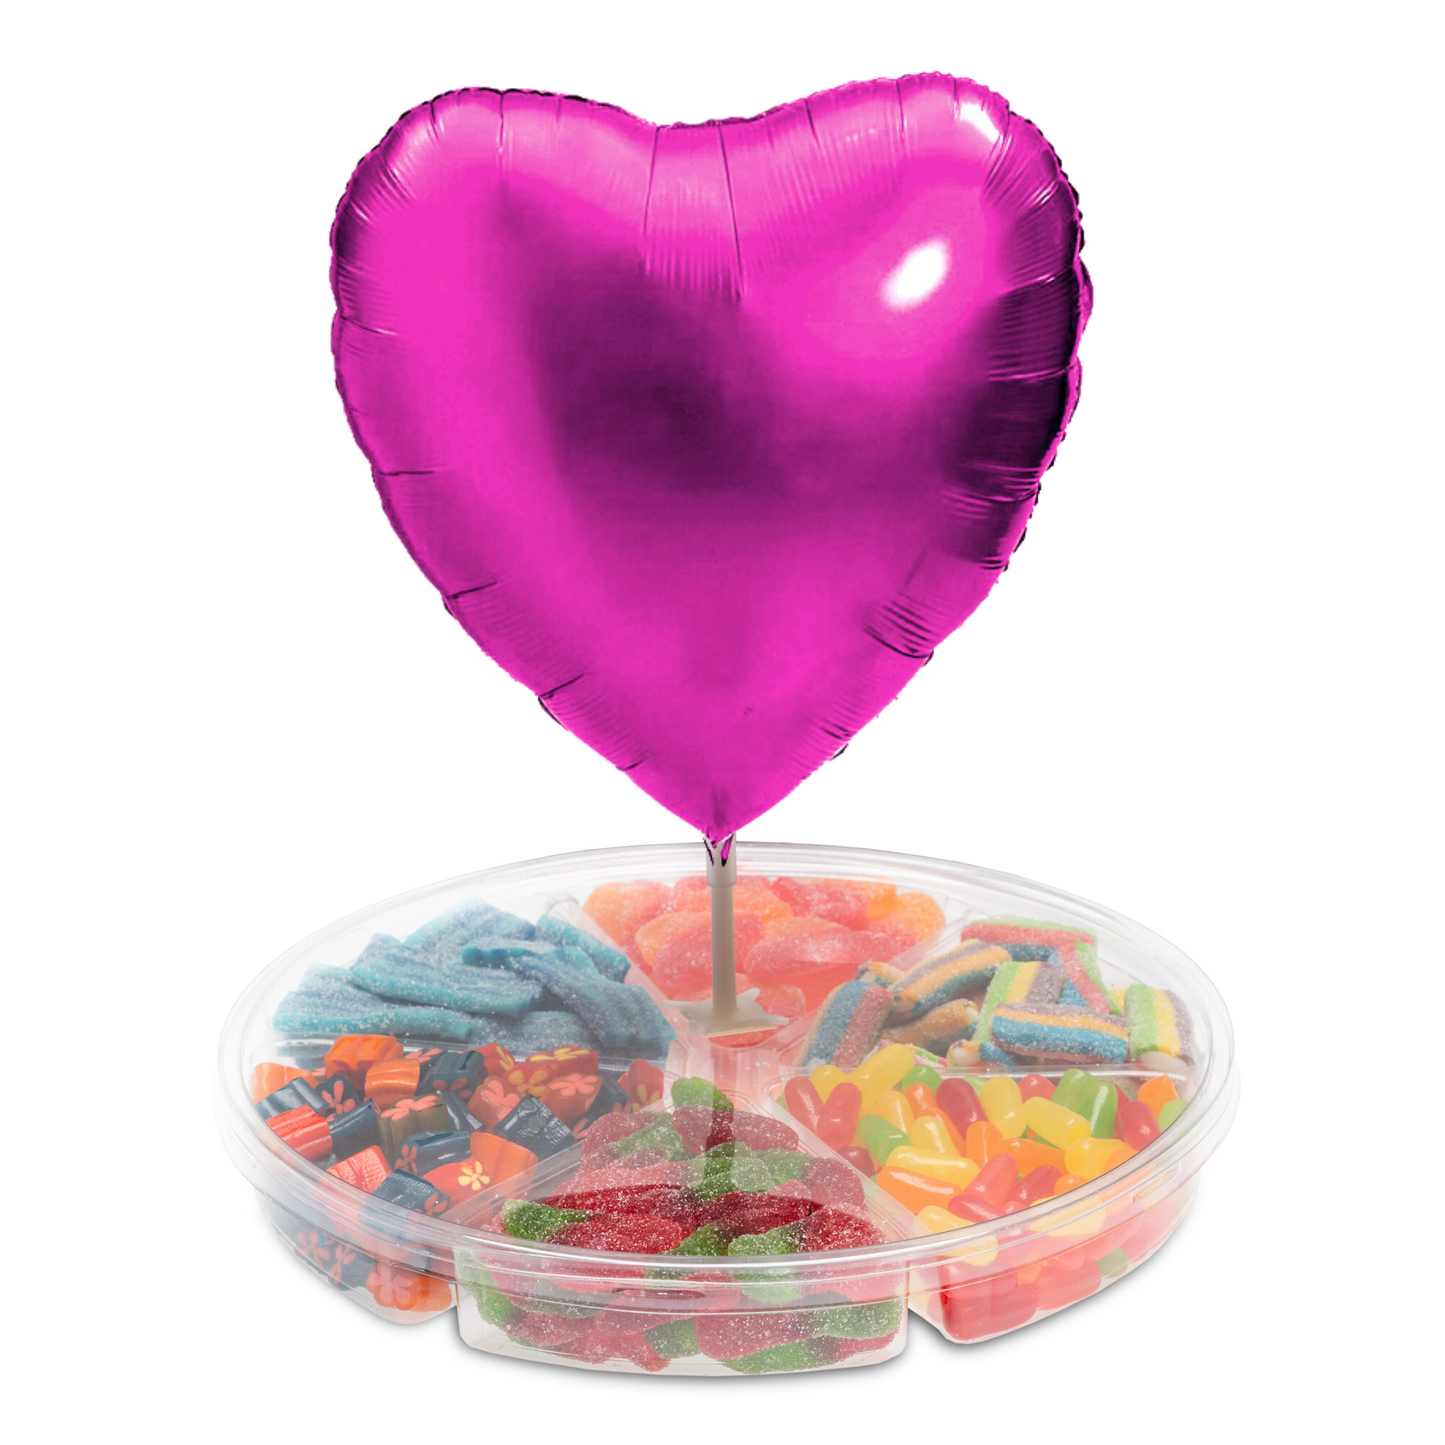 Medium Platter with Heart Shape Balloon